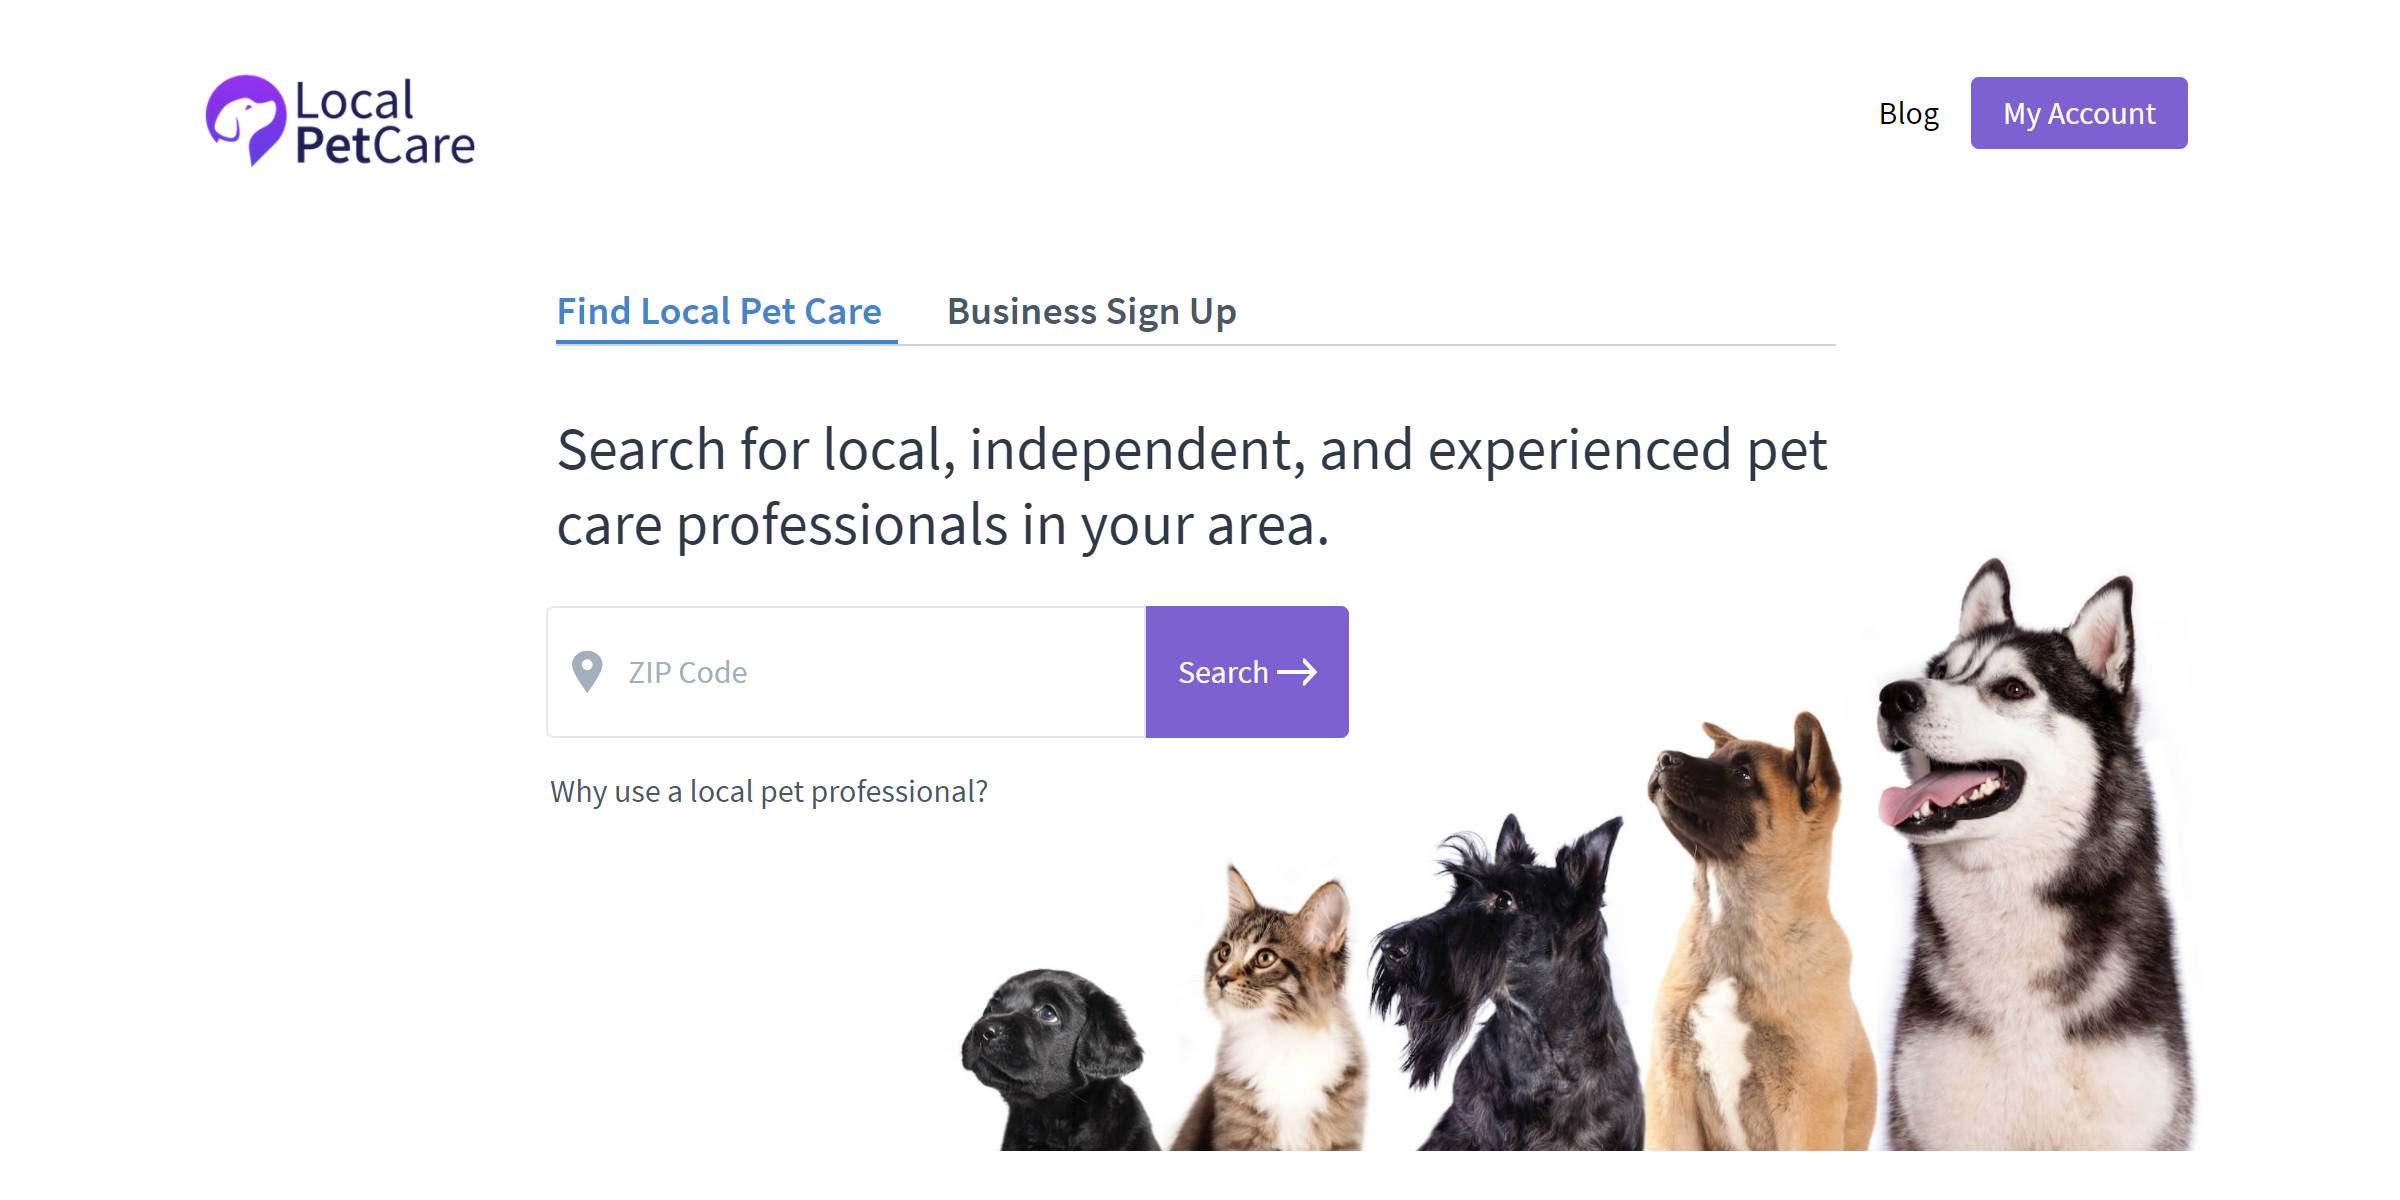 local-pet-care-blog-summary-image.jpg